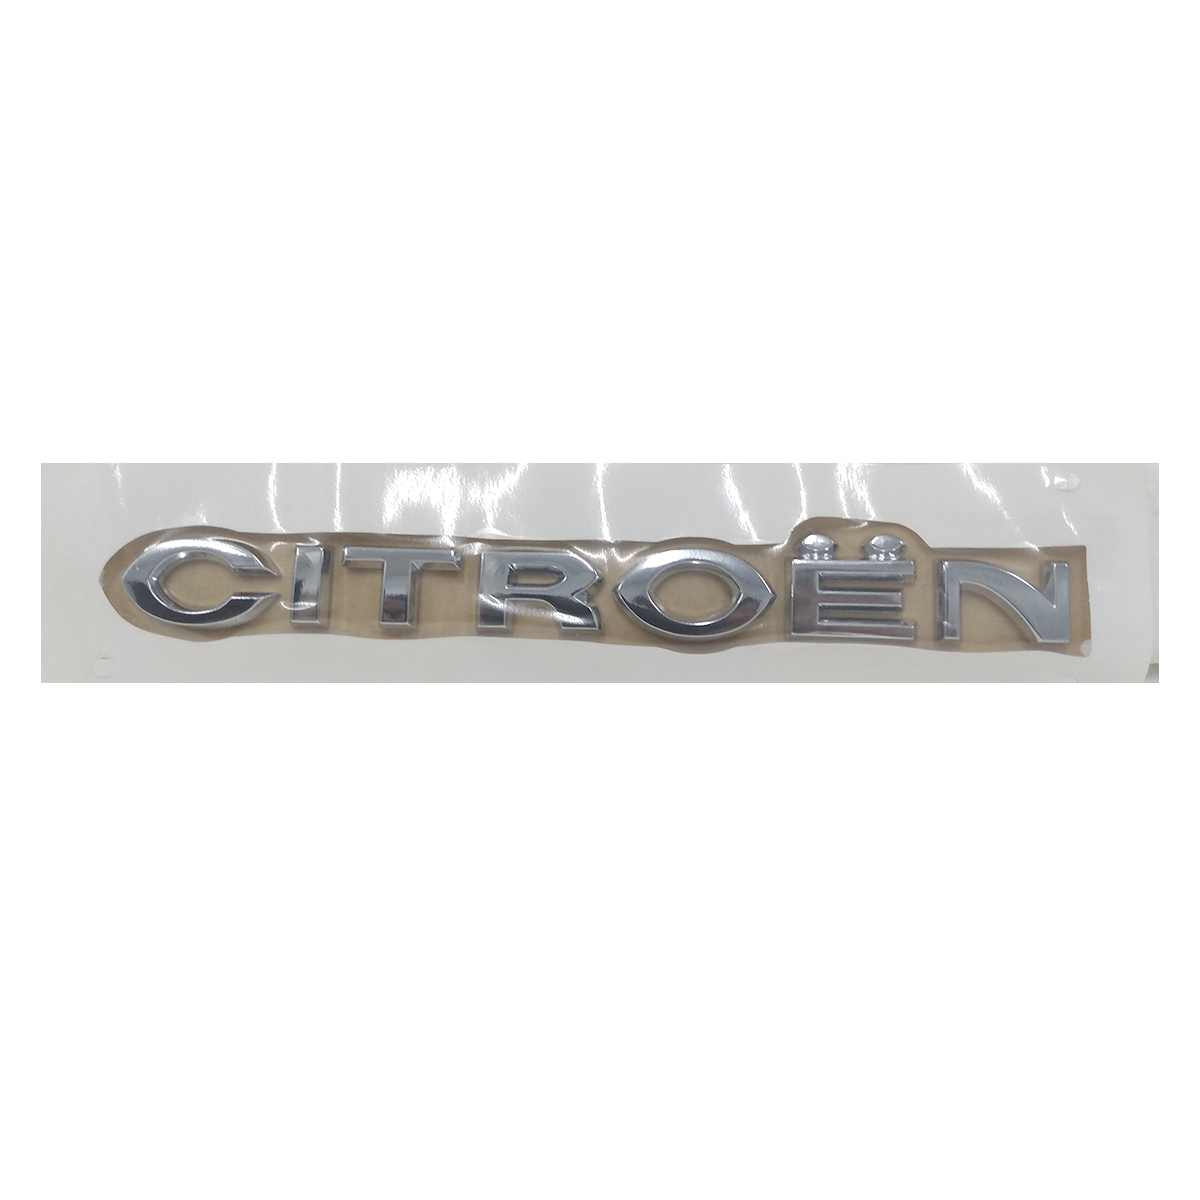 Emblema Monograma Traseira Citroen C3 Original 2003 À 2011